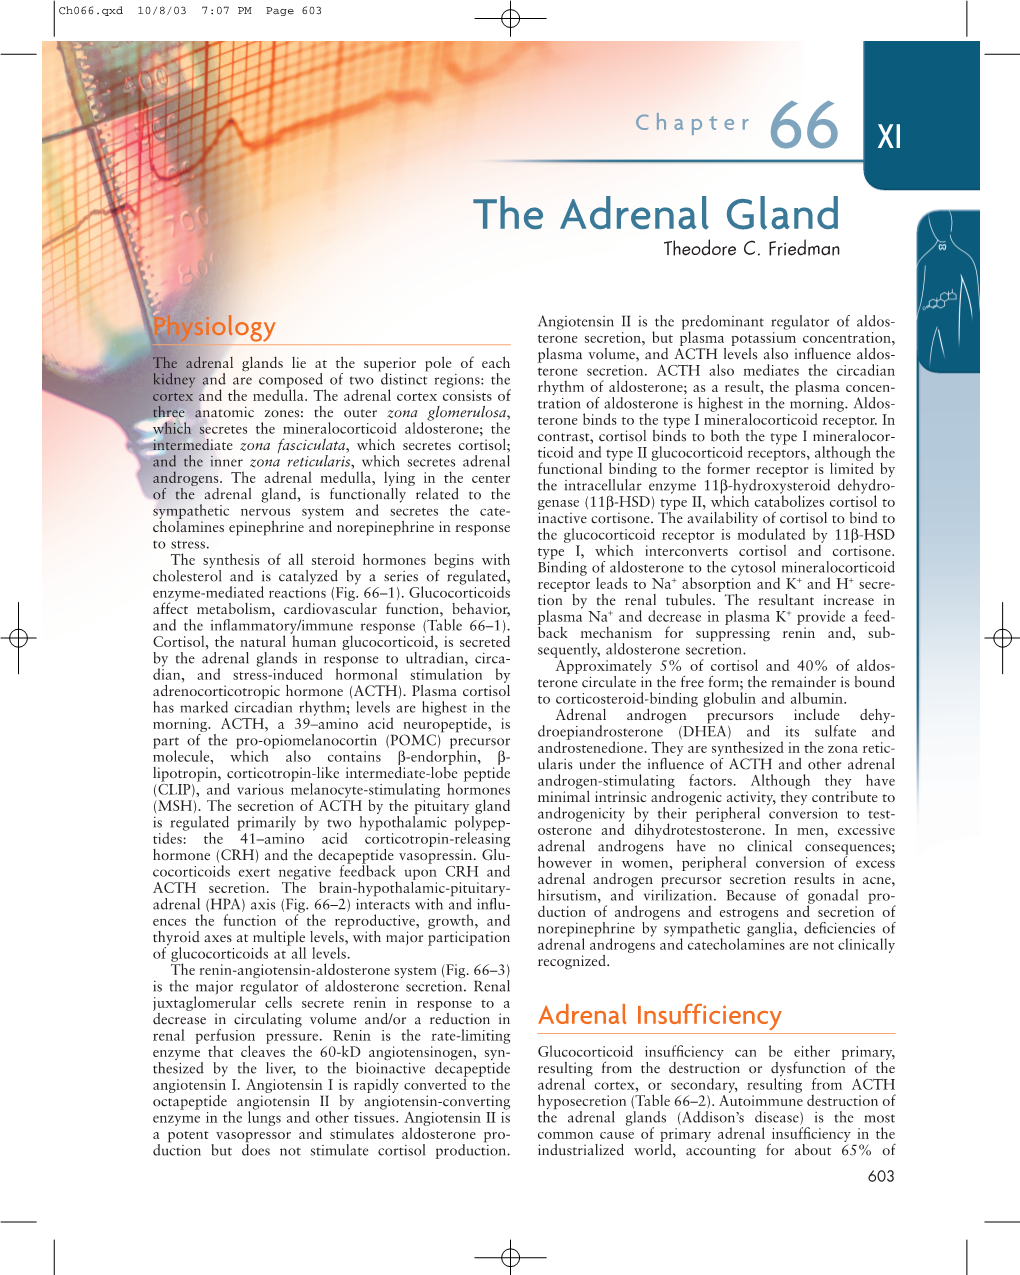 The Adrenal Gland Theodore C